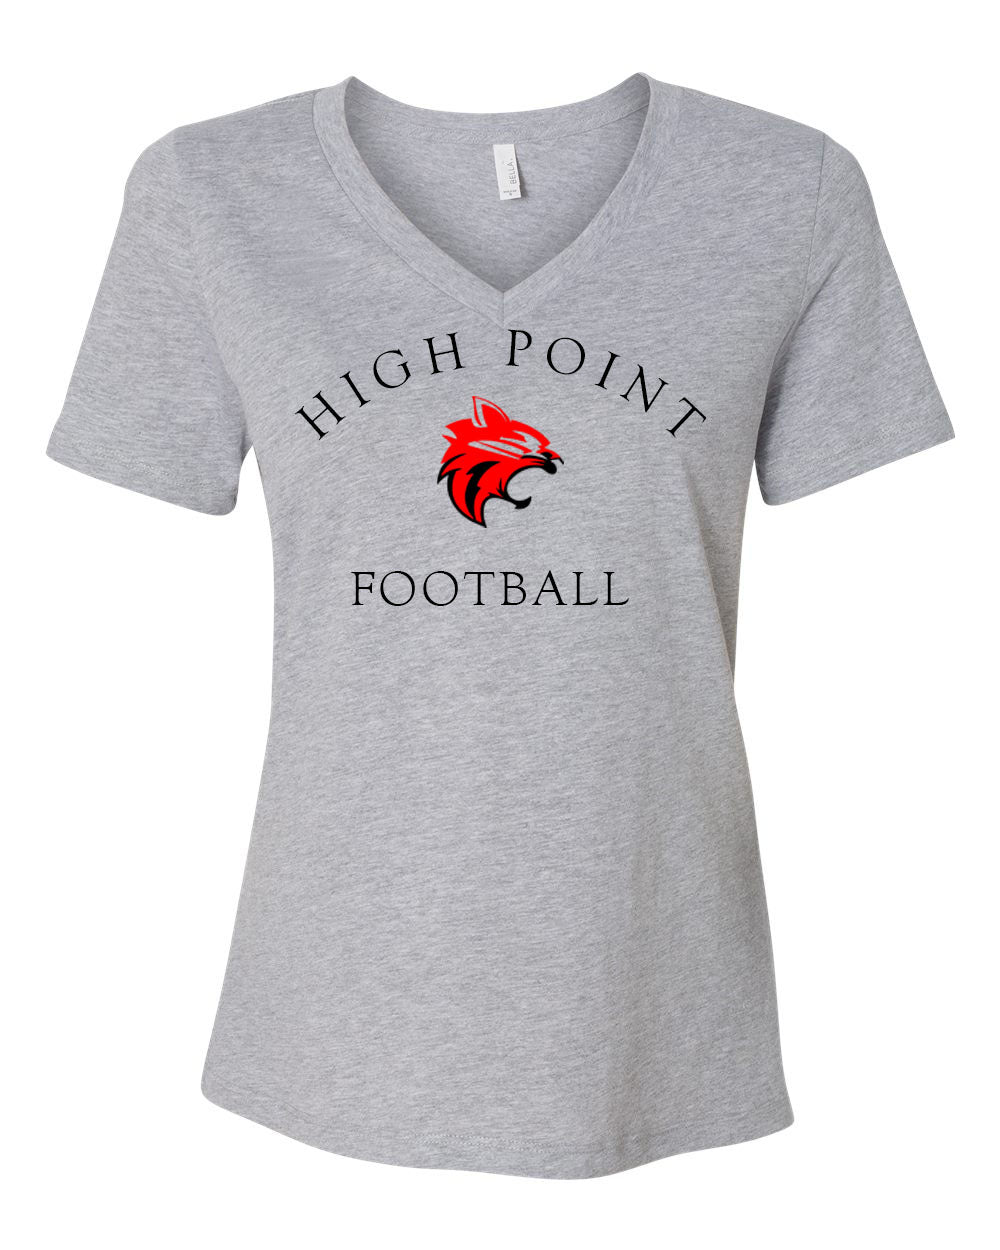 High Point Football Design 3 V-neck T-Shirt